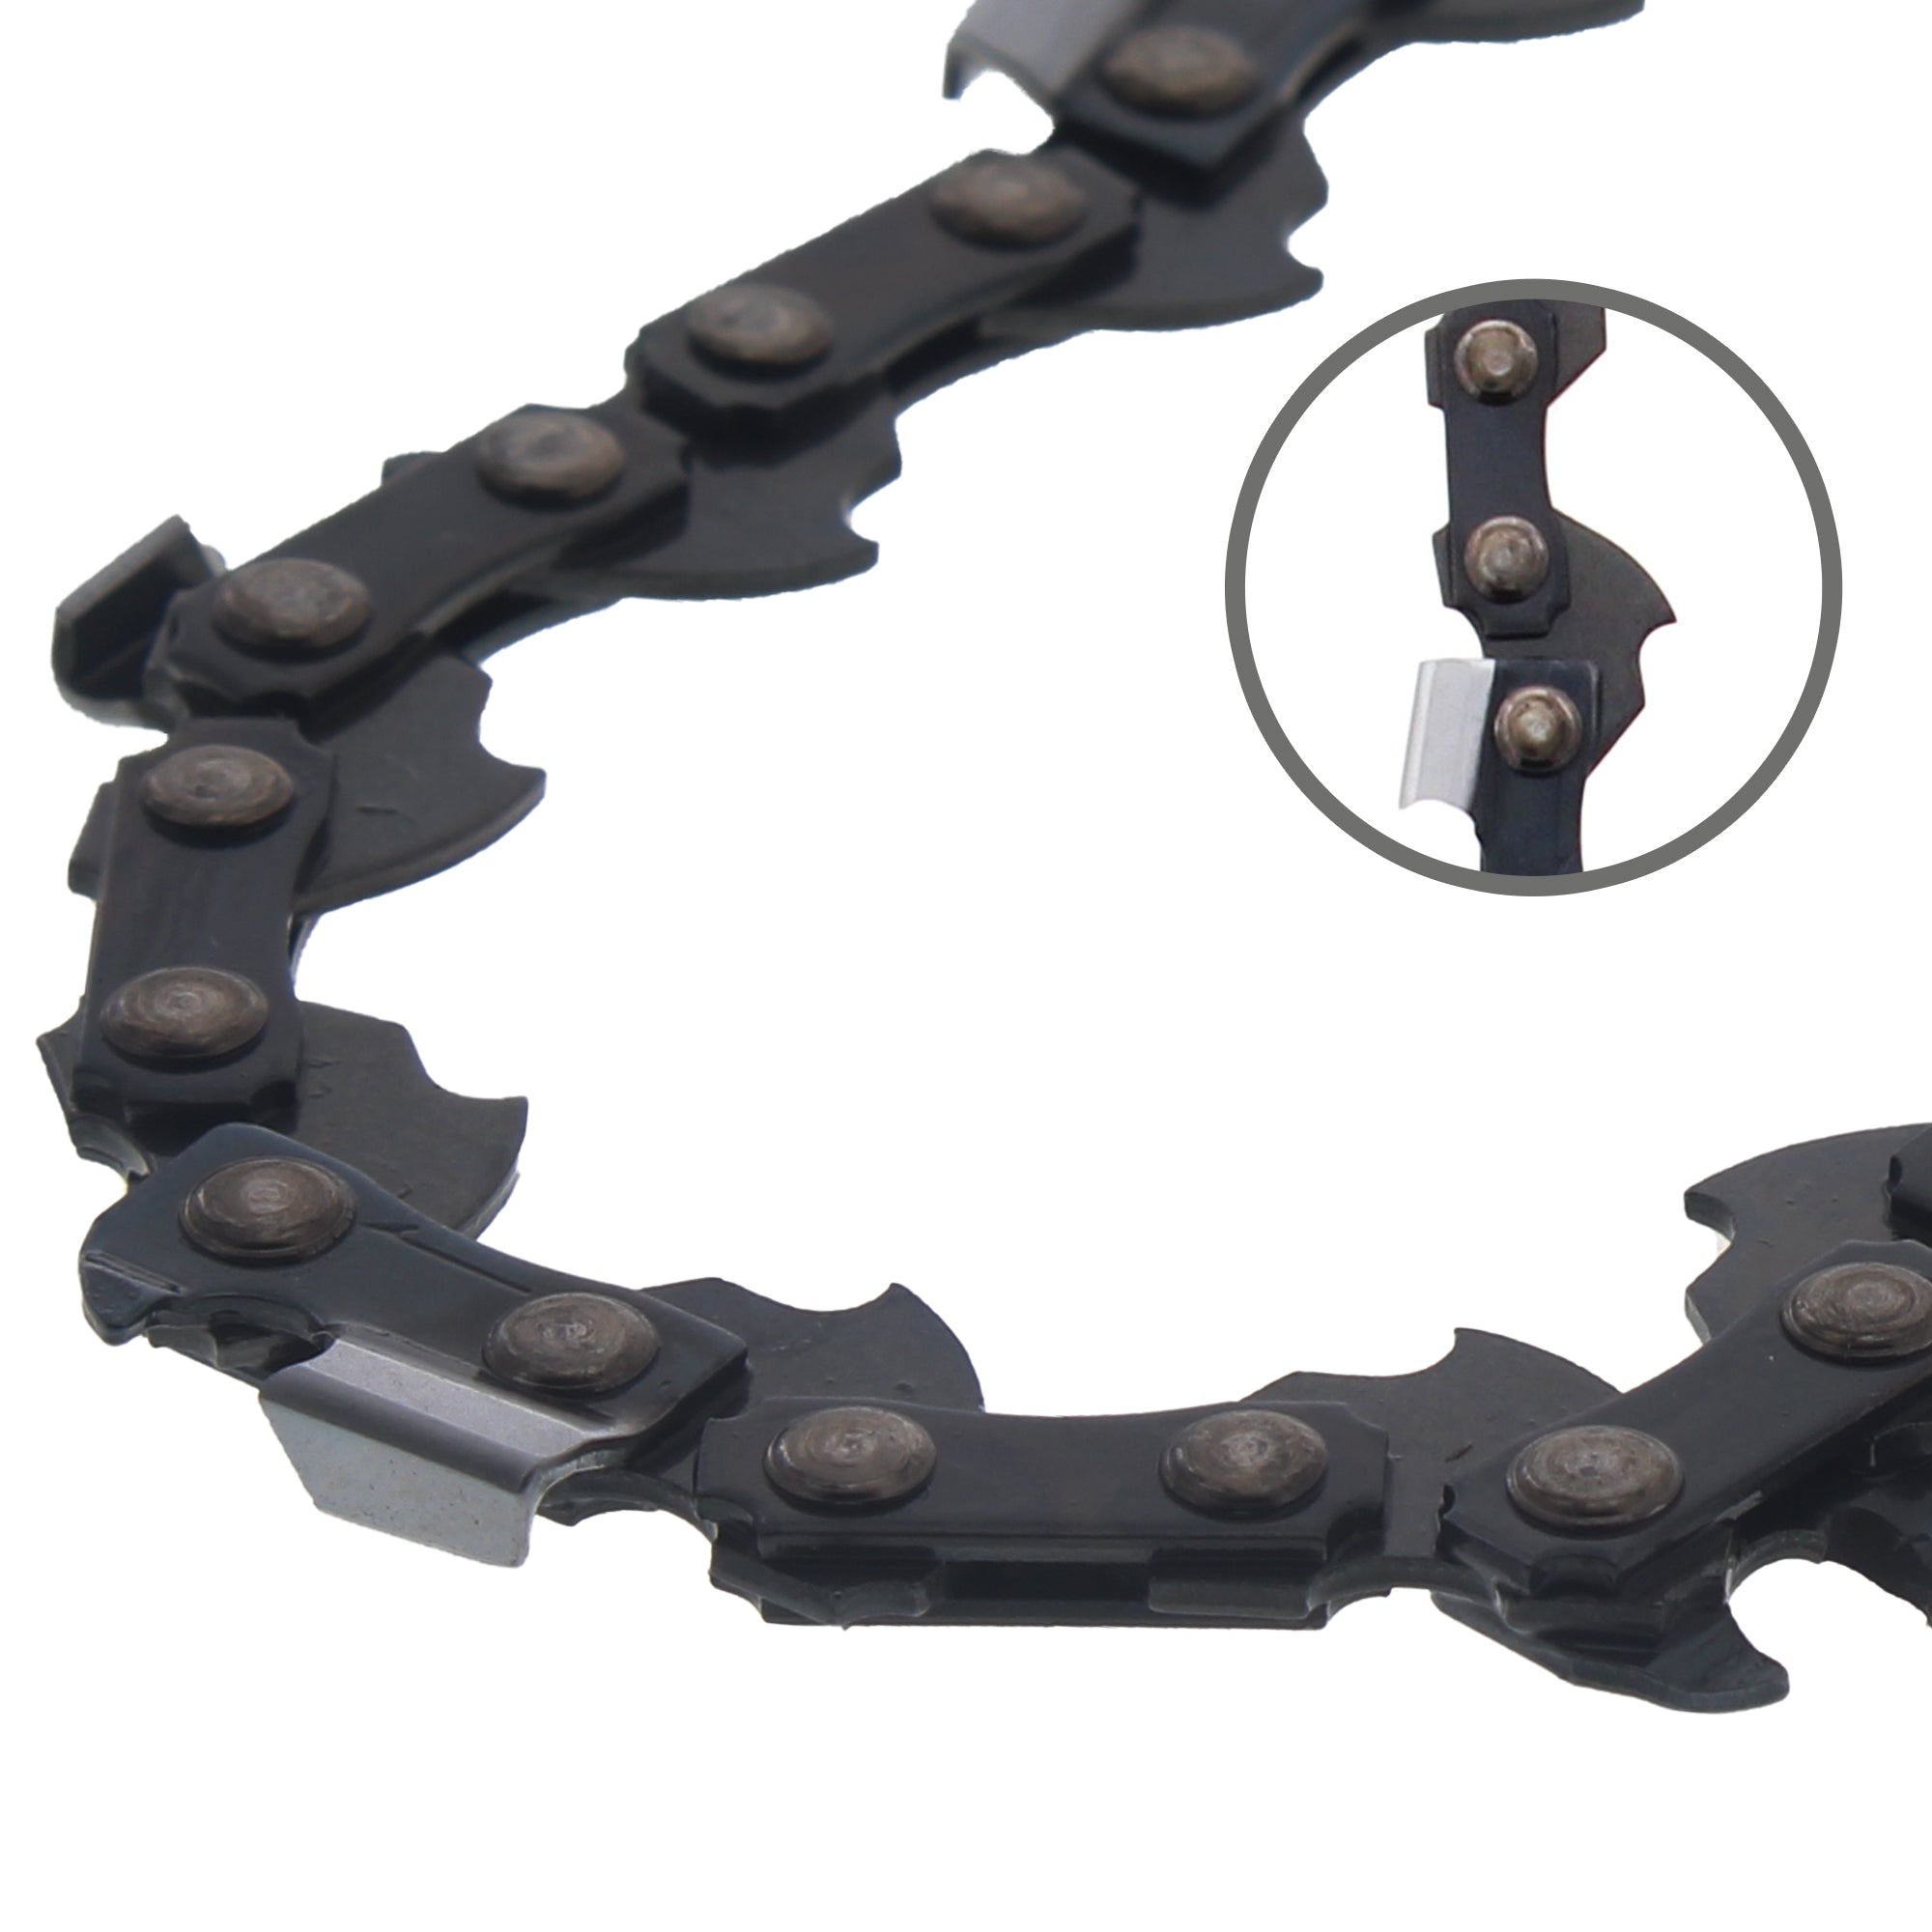 Chainsaw Chain Bulk Reel Semi Chisel 25 Foot .043 3/8 Pitch Low Profile